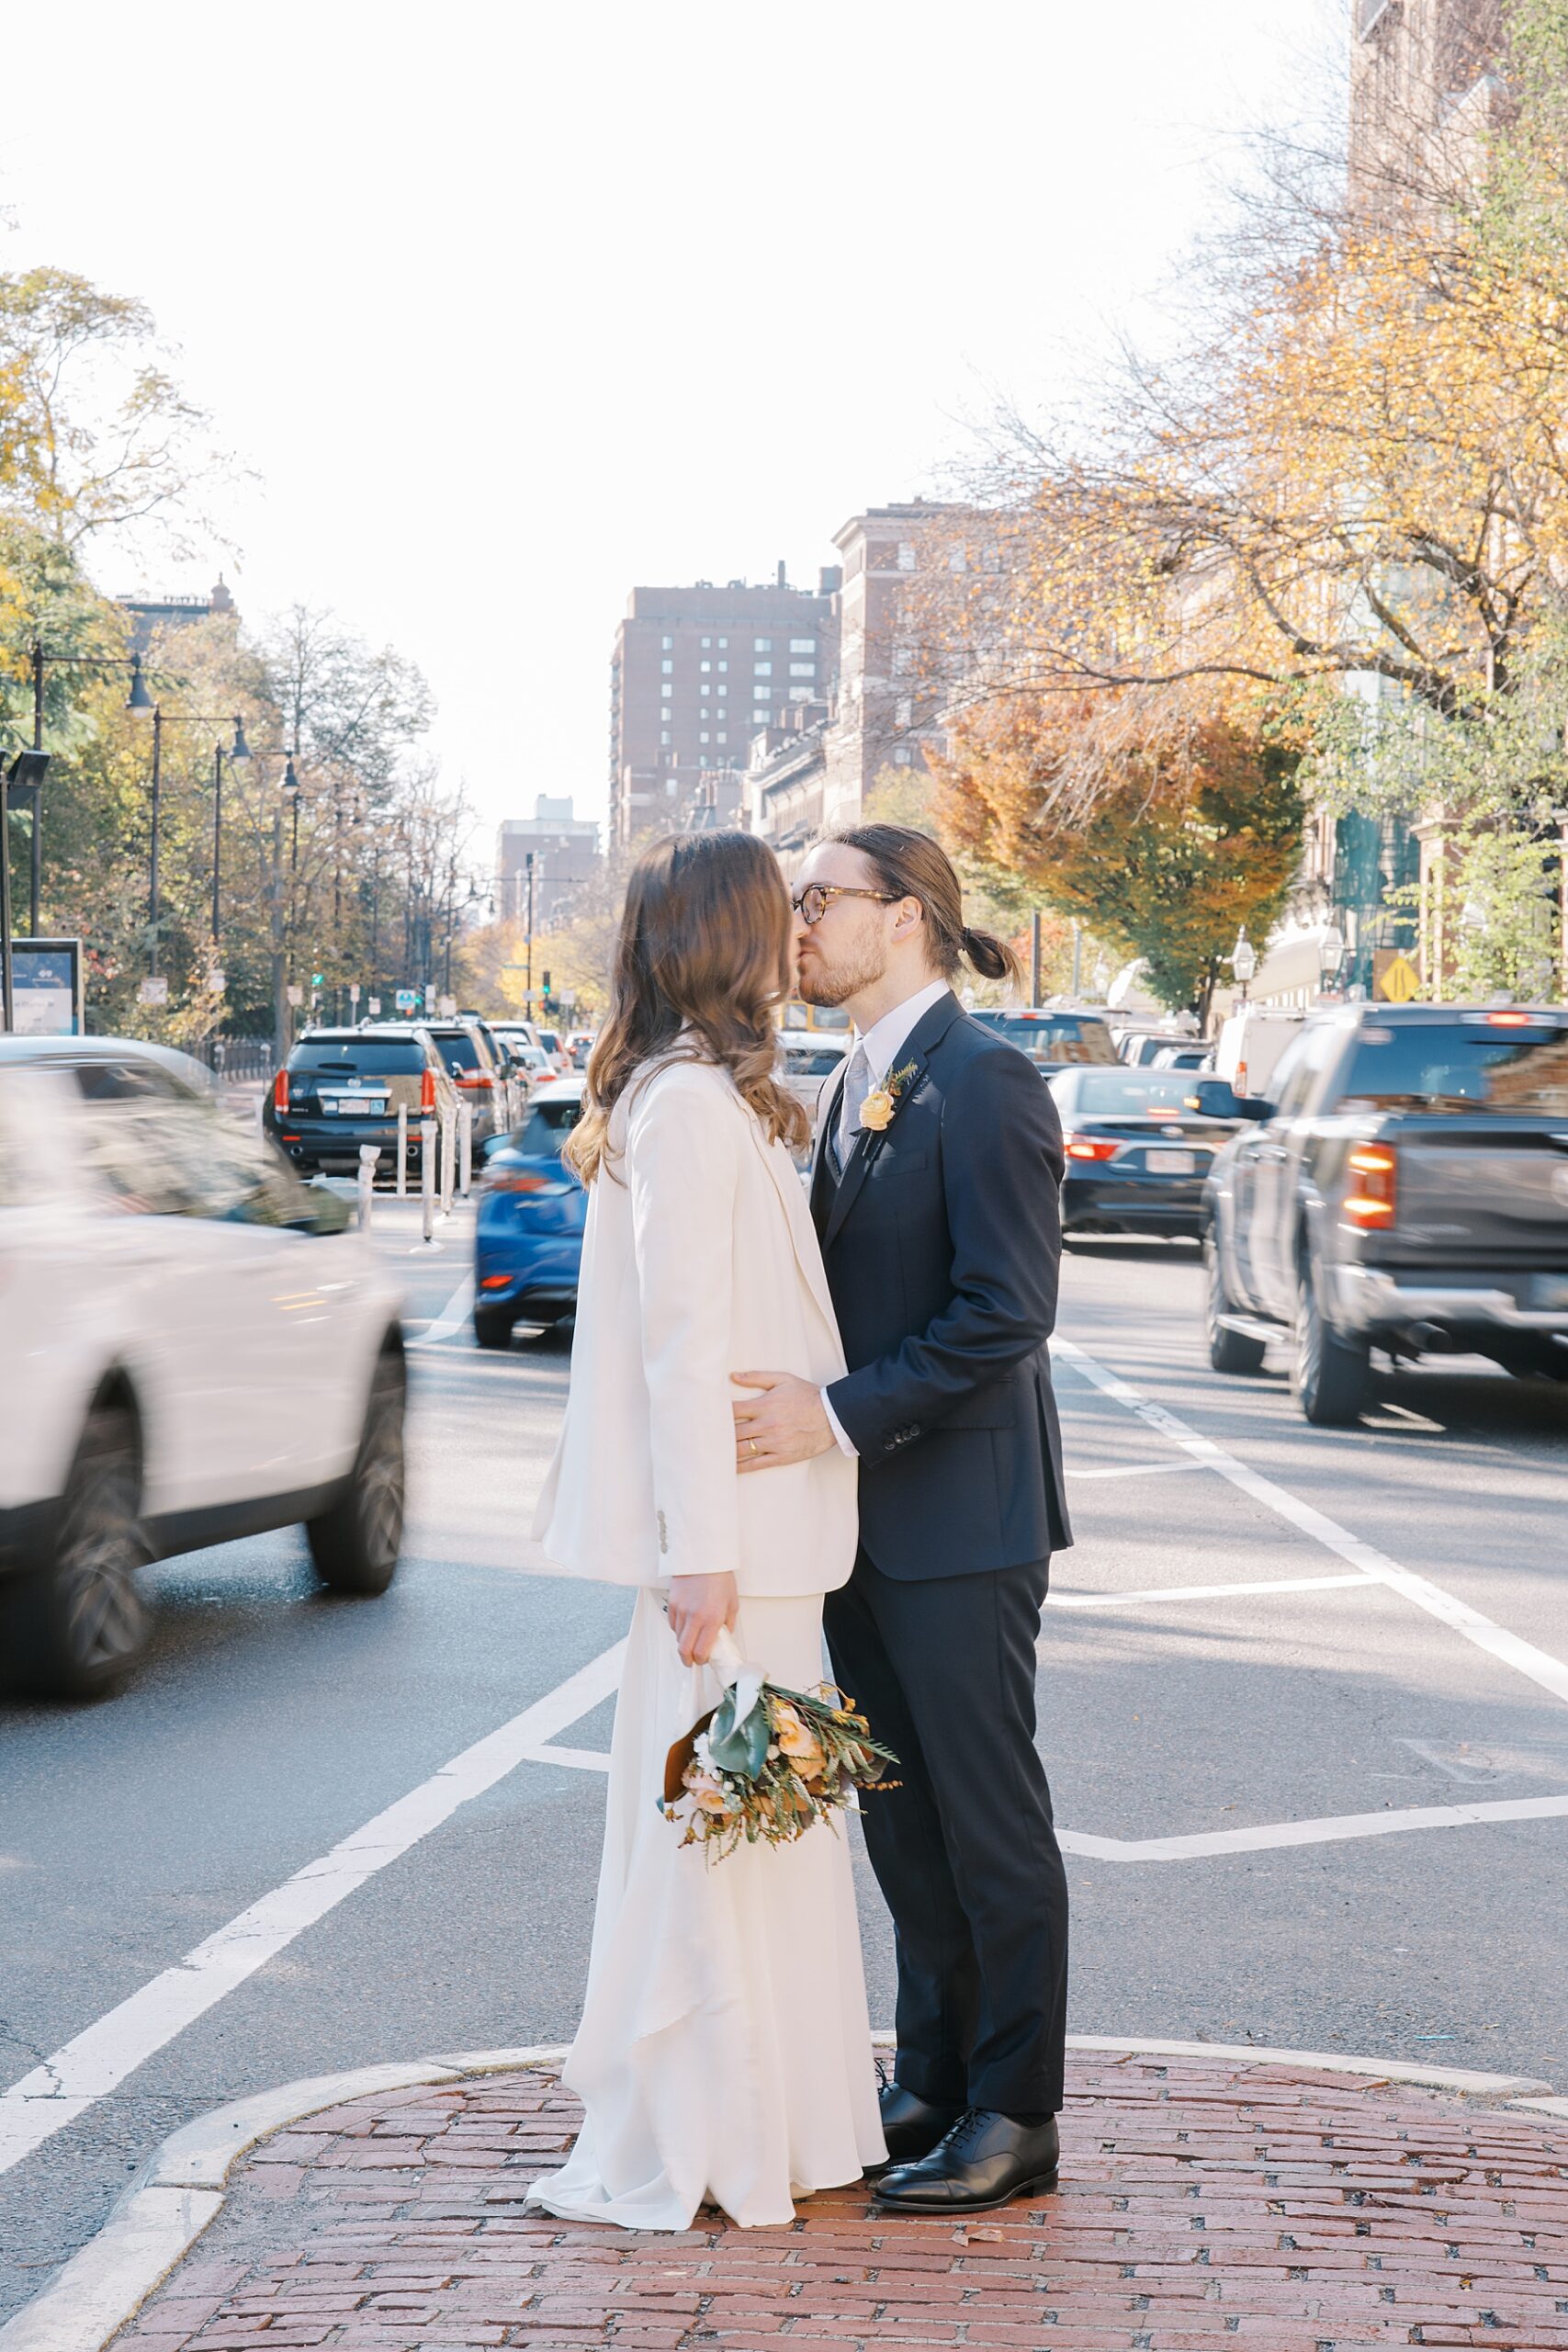 newlyweds kiss near busy Boston street